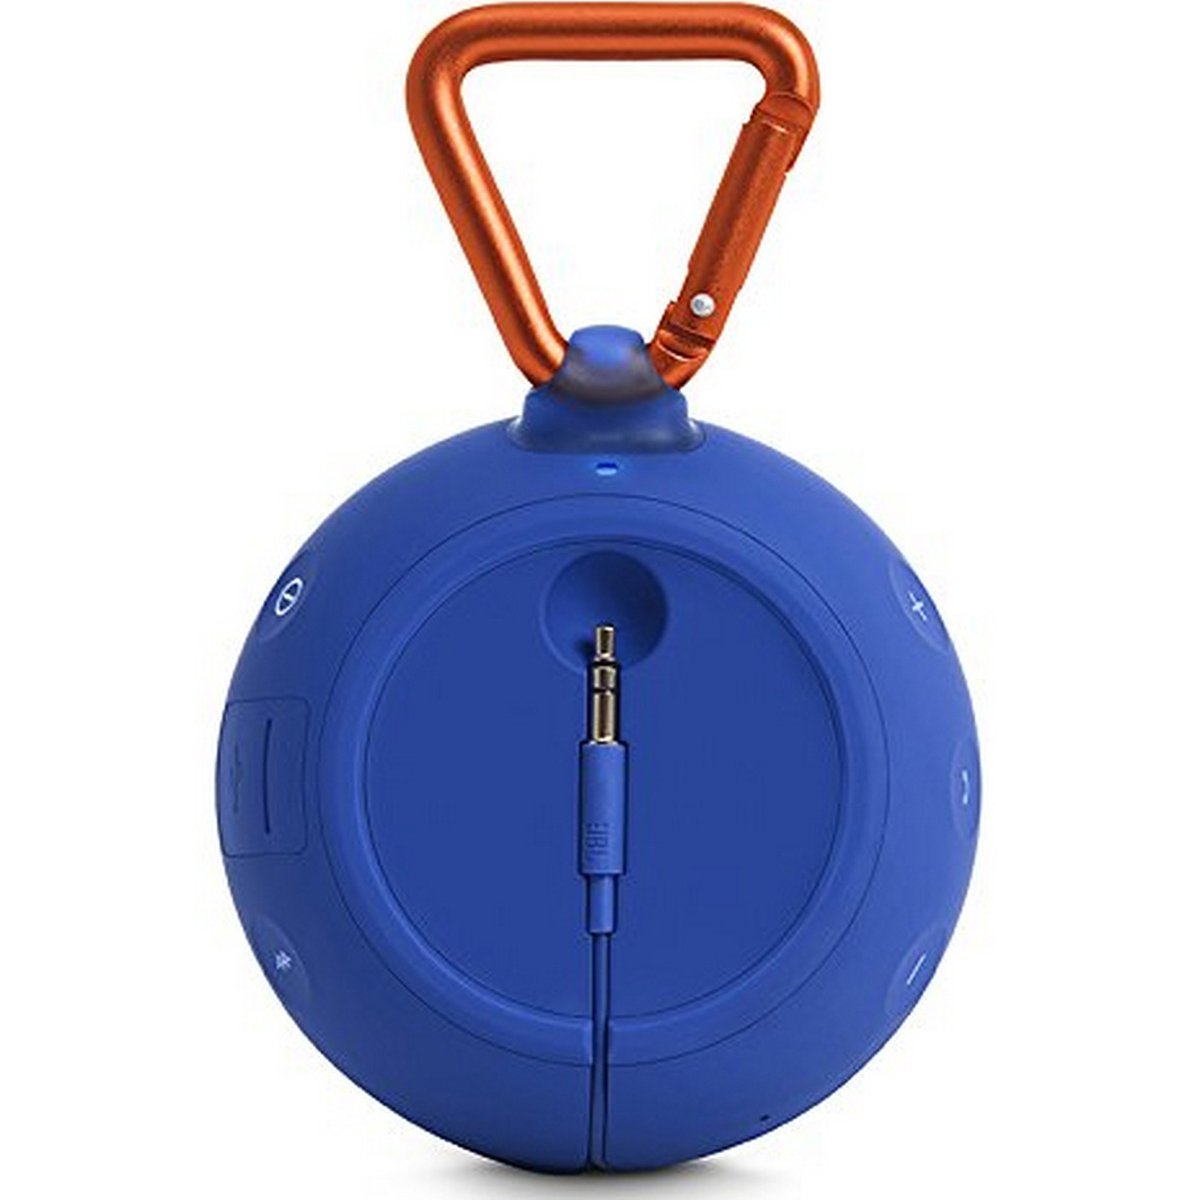 JBL Bluetooth Speaker Clip2 Blue